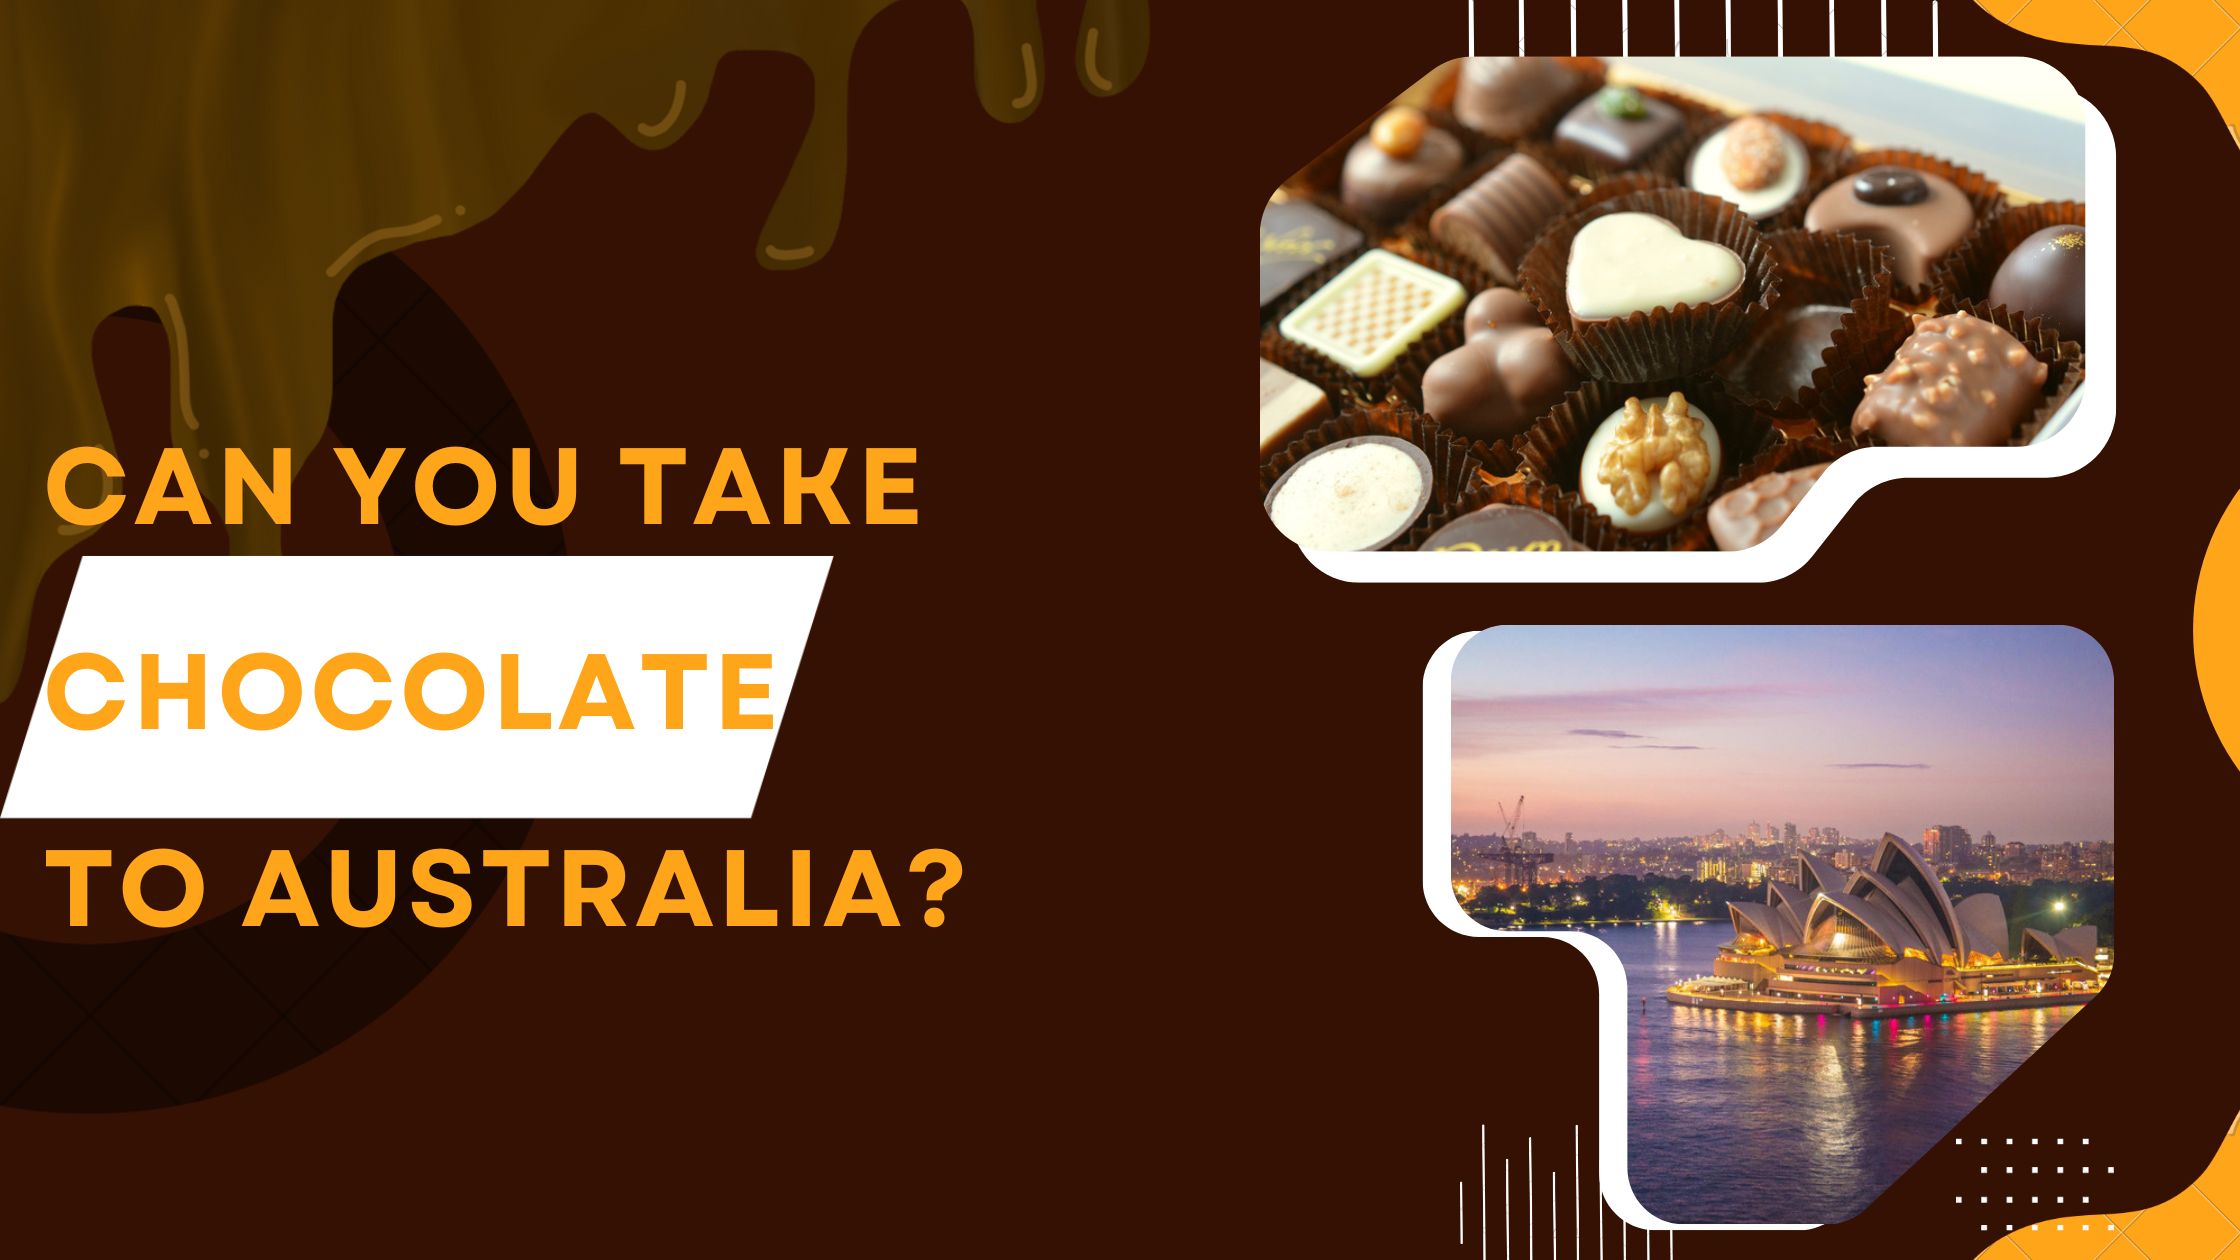 CAN YOU TAKE CHOCOLATE TO AUSTRALIA